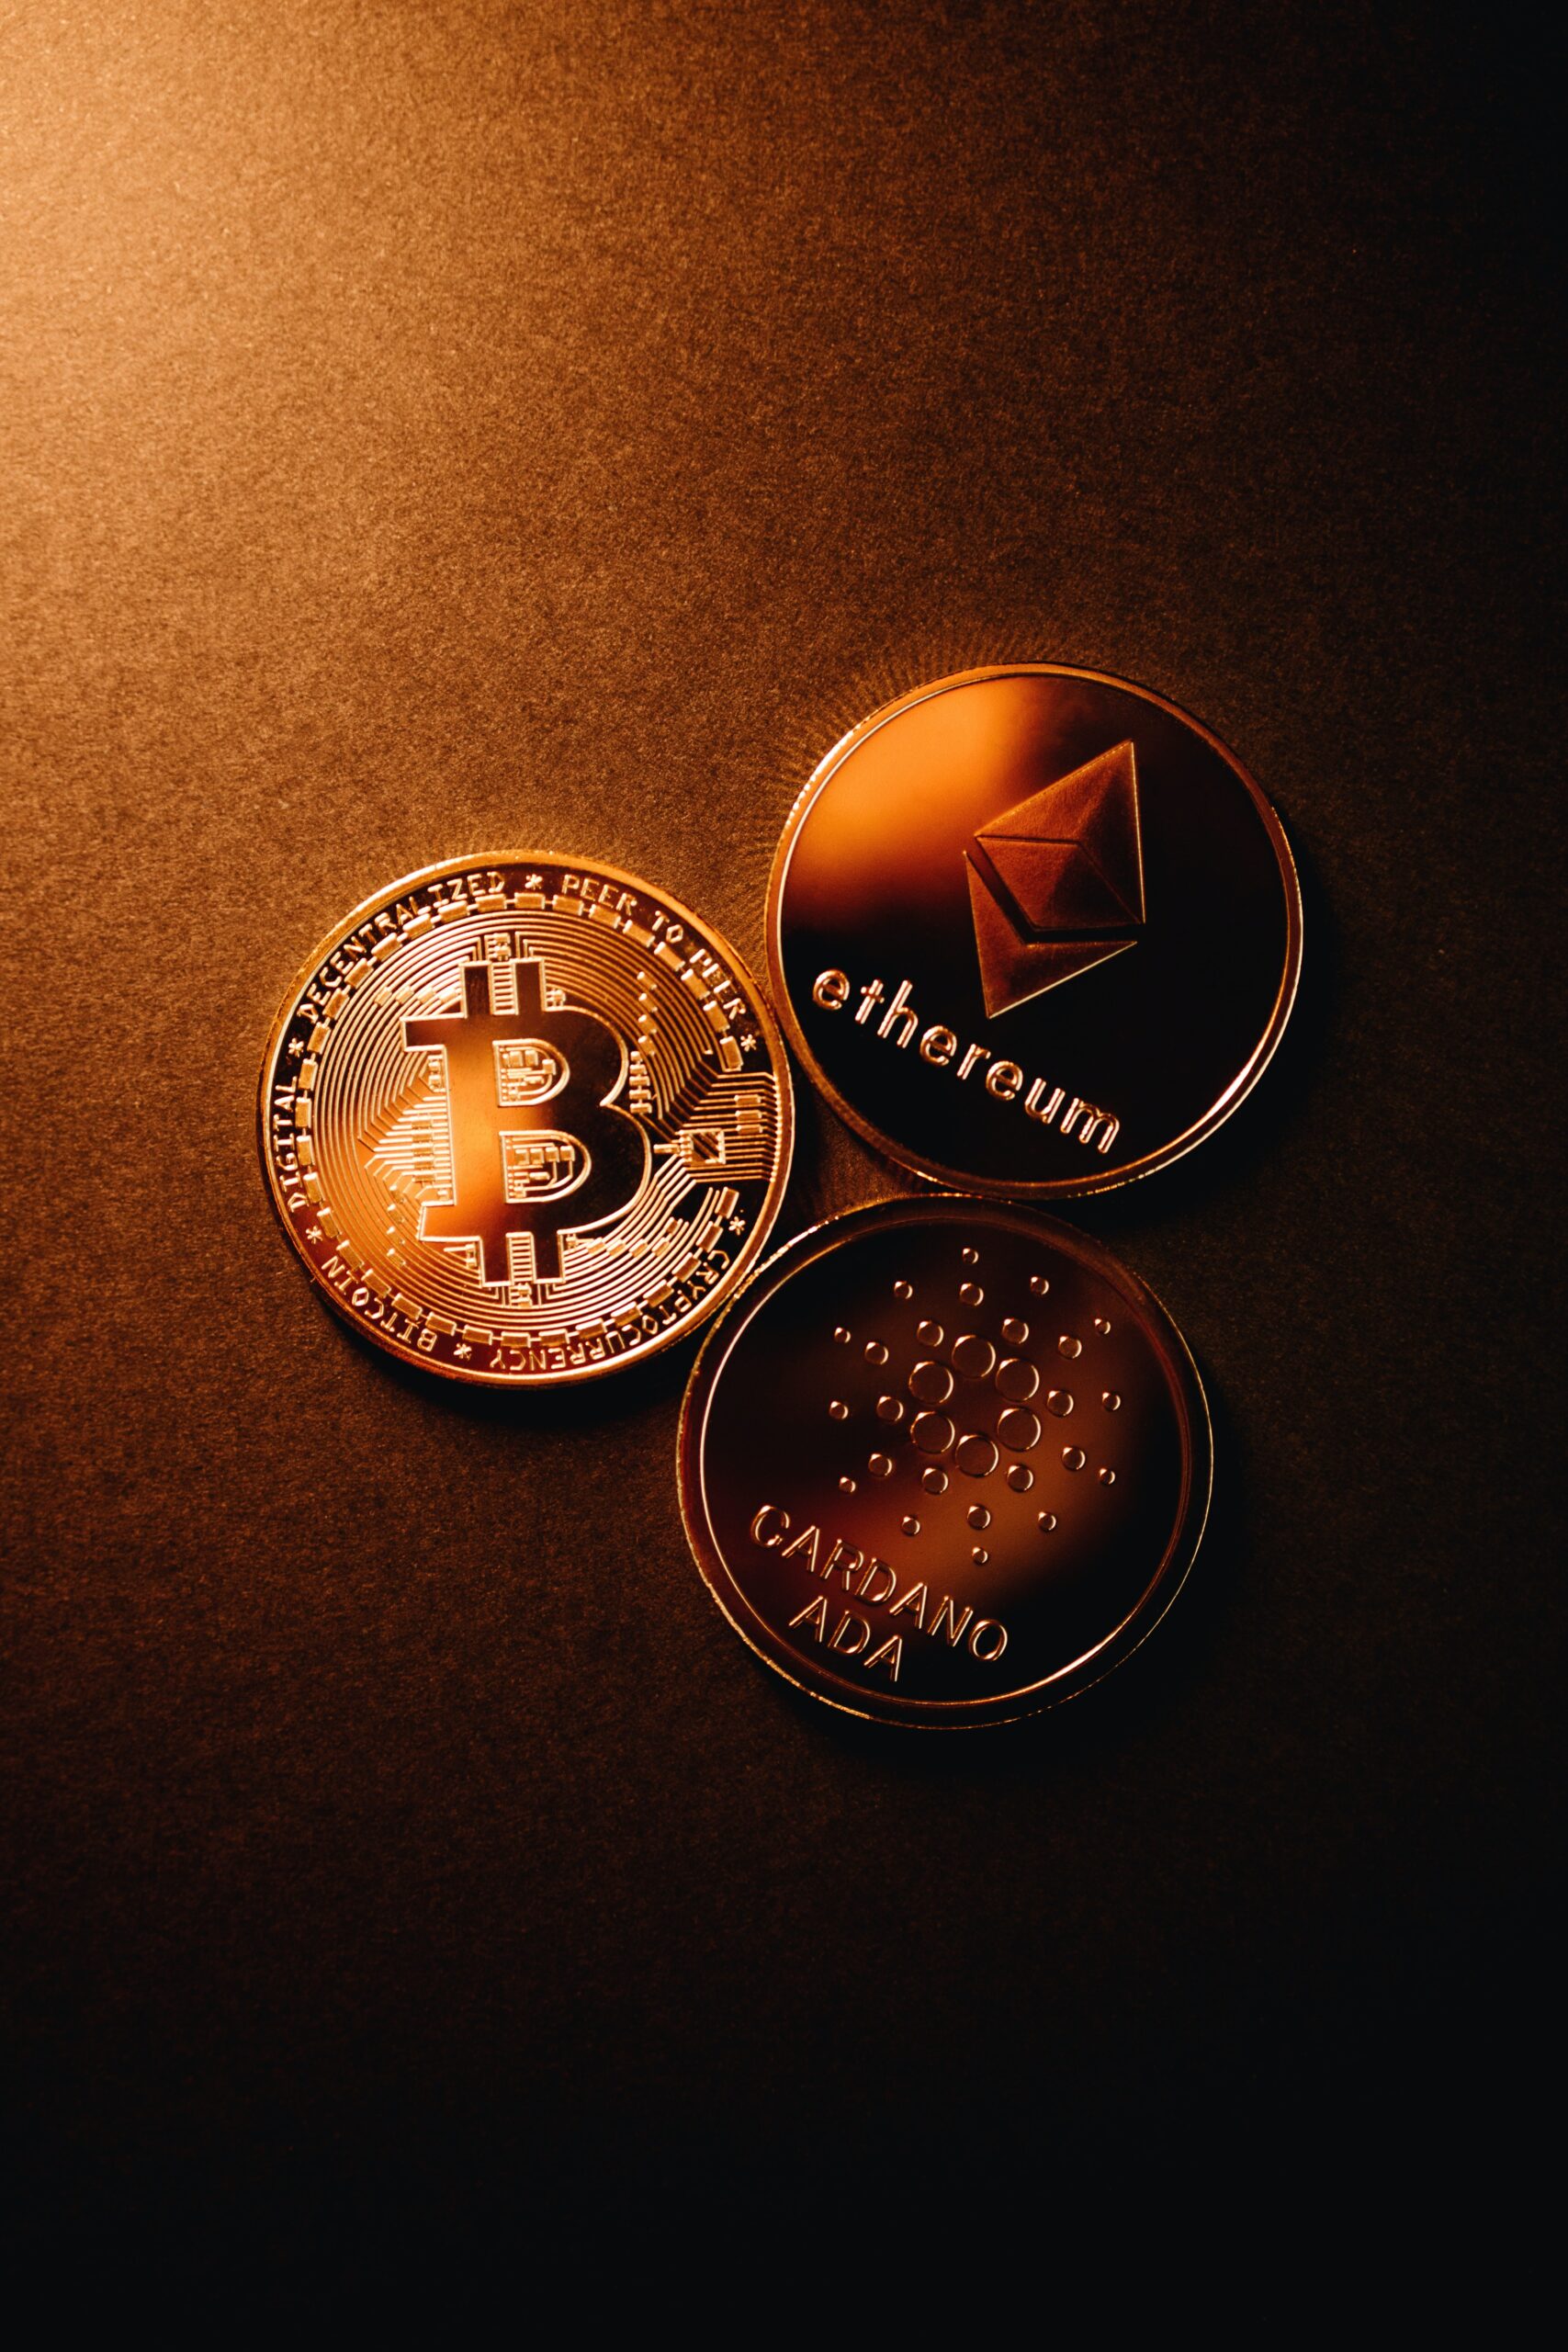 Cardano cryptocurrency logo ADA coin symbol Cardano blockchain technology Cardano's innovative proof-of-stake protocol